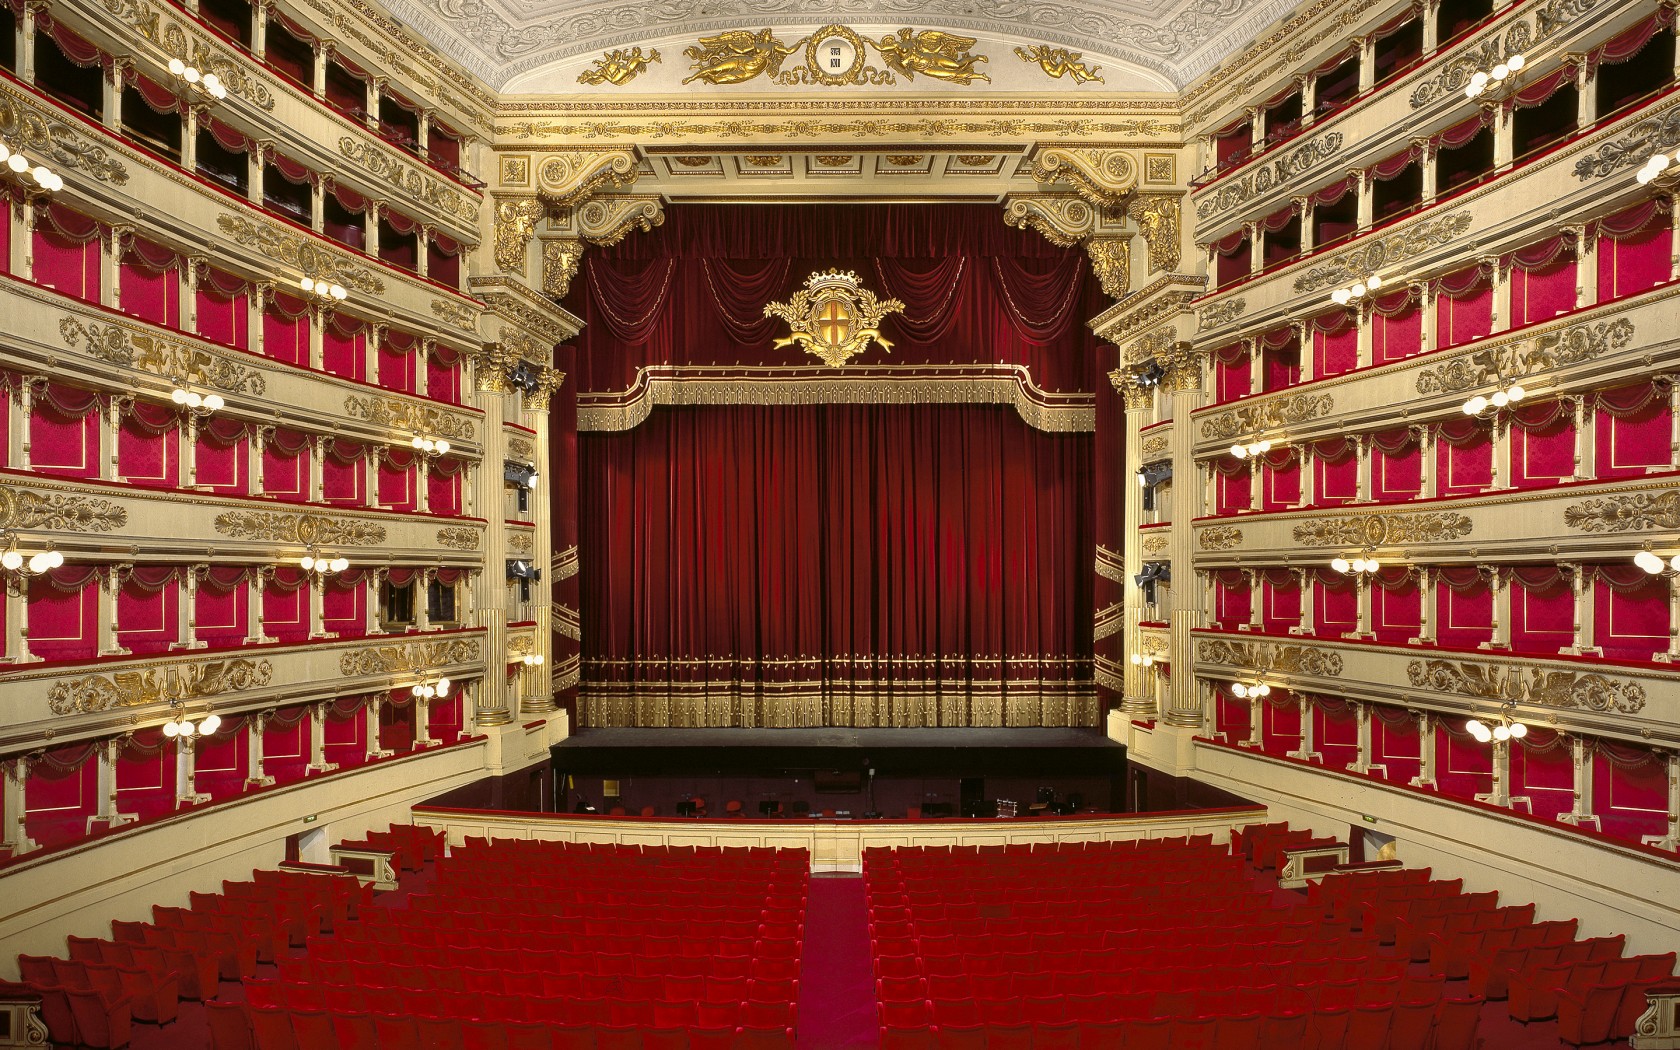 La scala. Милан театр ла скала. Театр Алла скала Милан. Италия театр ла скала. Оперный театр ла скала Италия Милан.